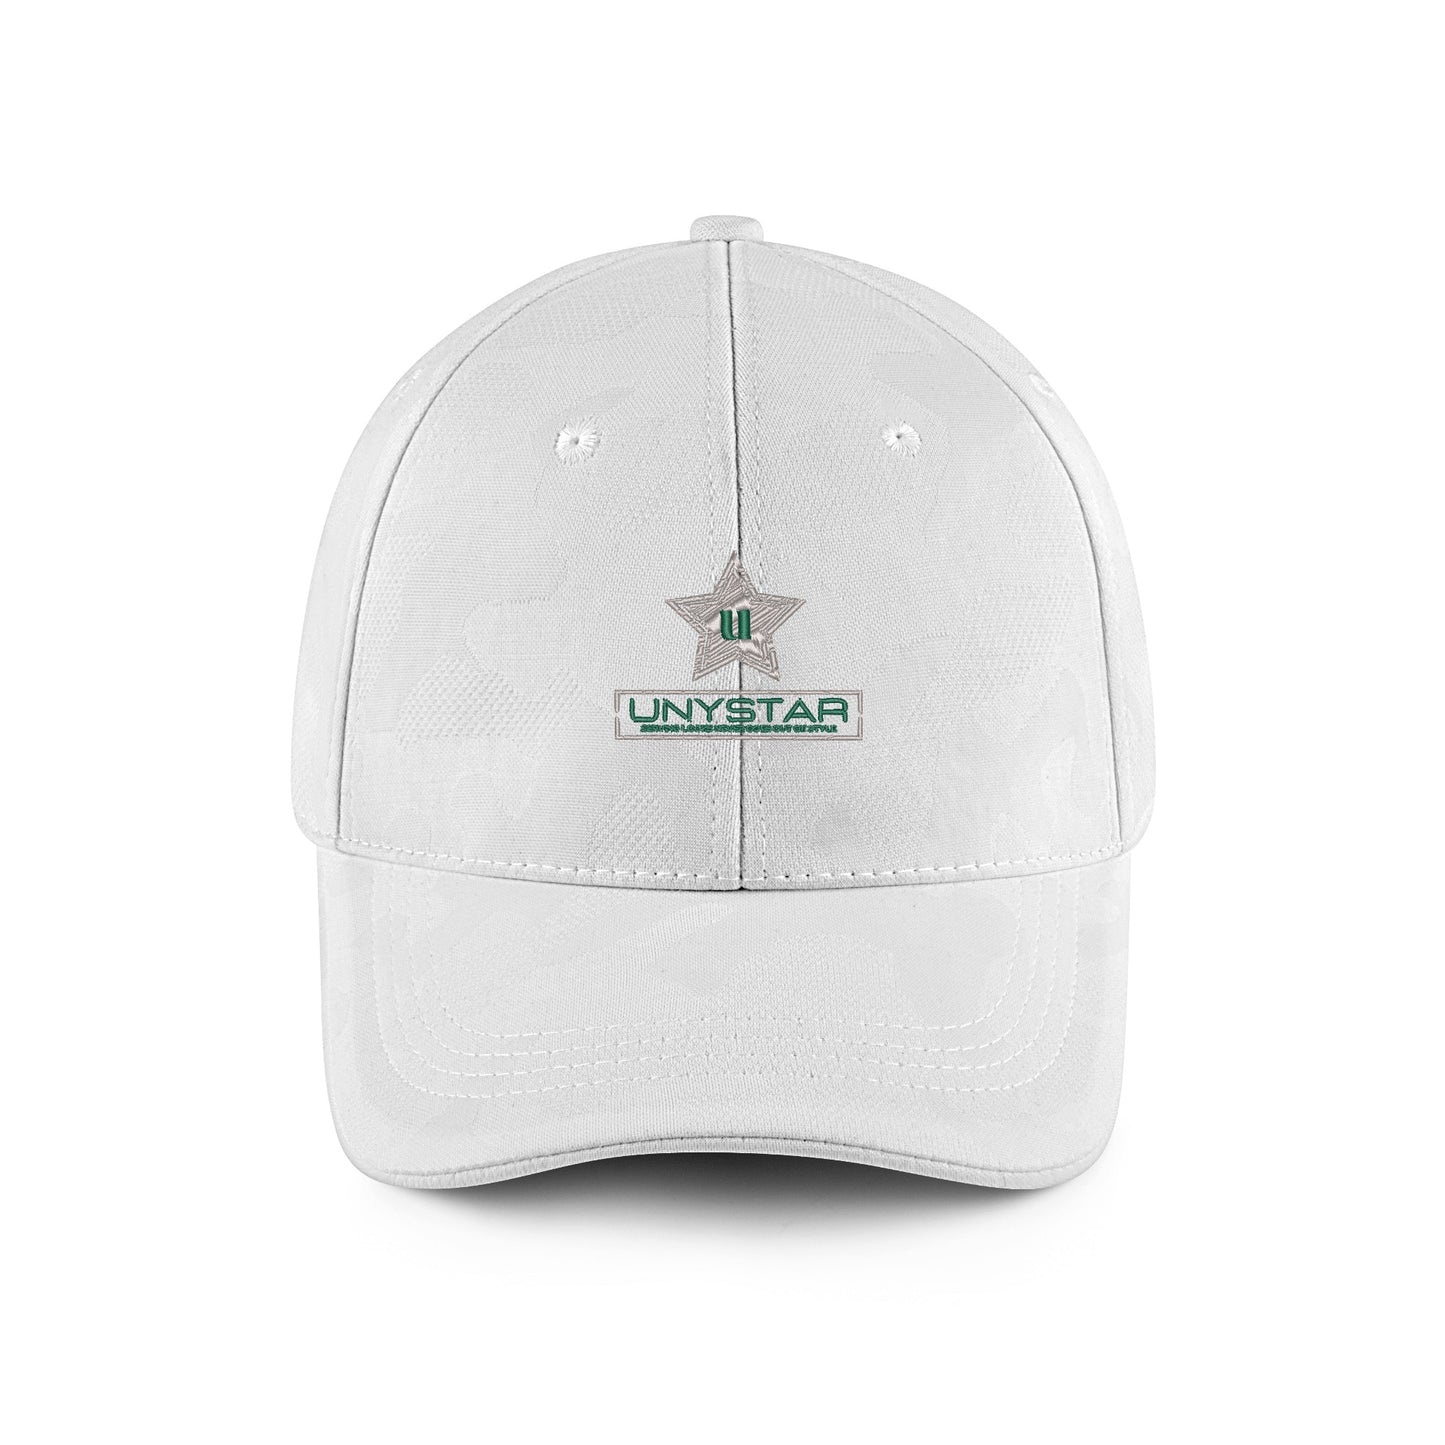 Embroidered Sports Camo Caps